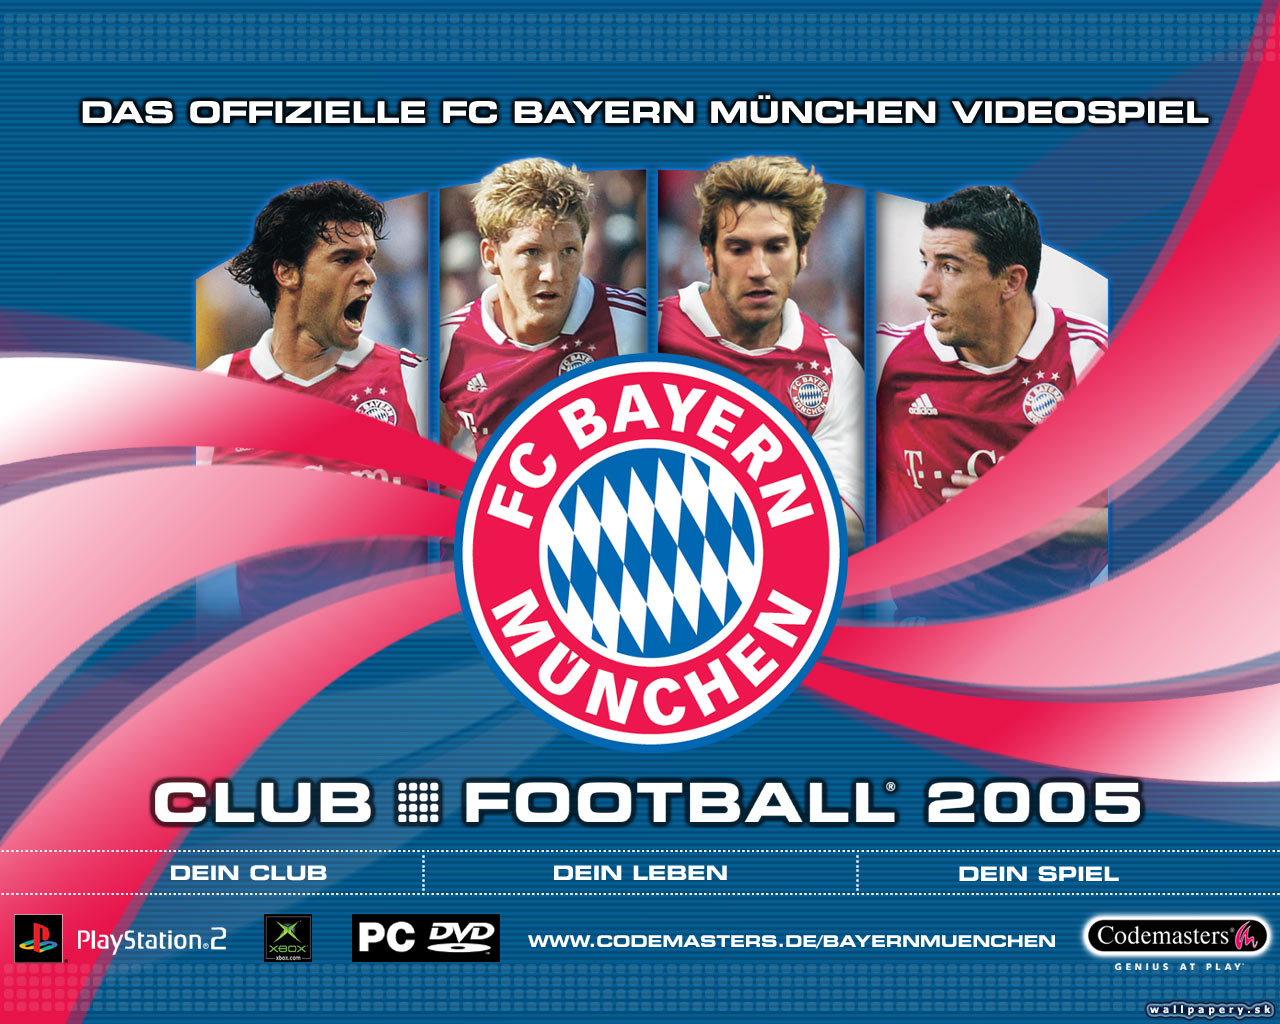 Club Football 2005 - wallpaper 11